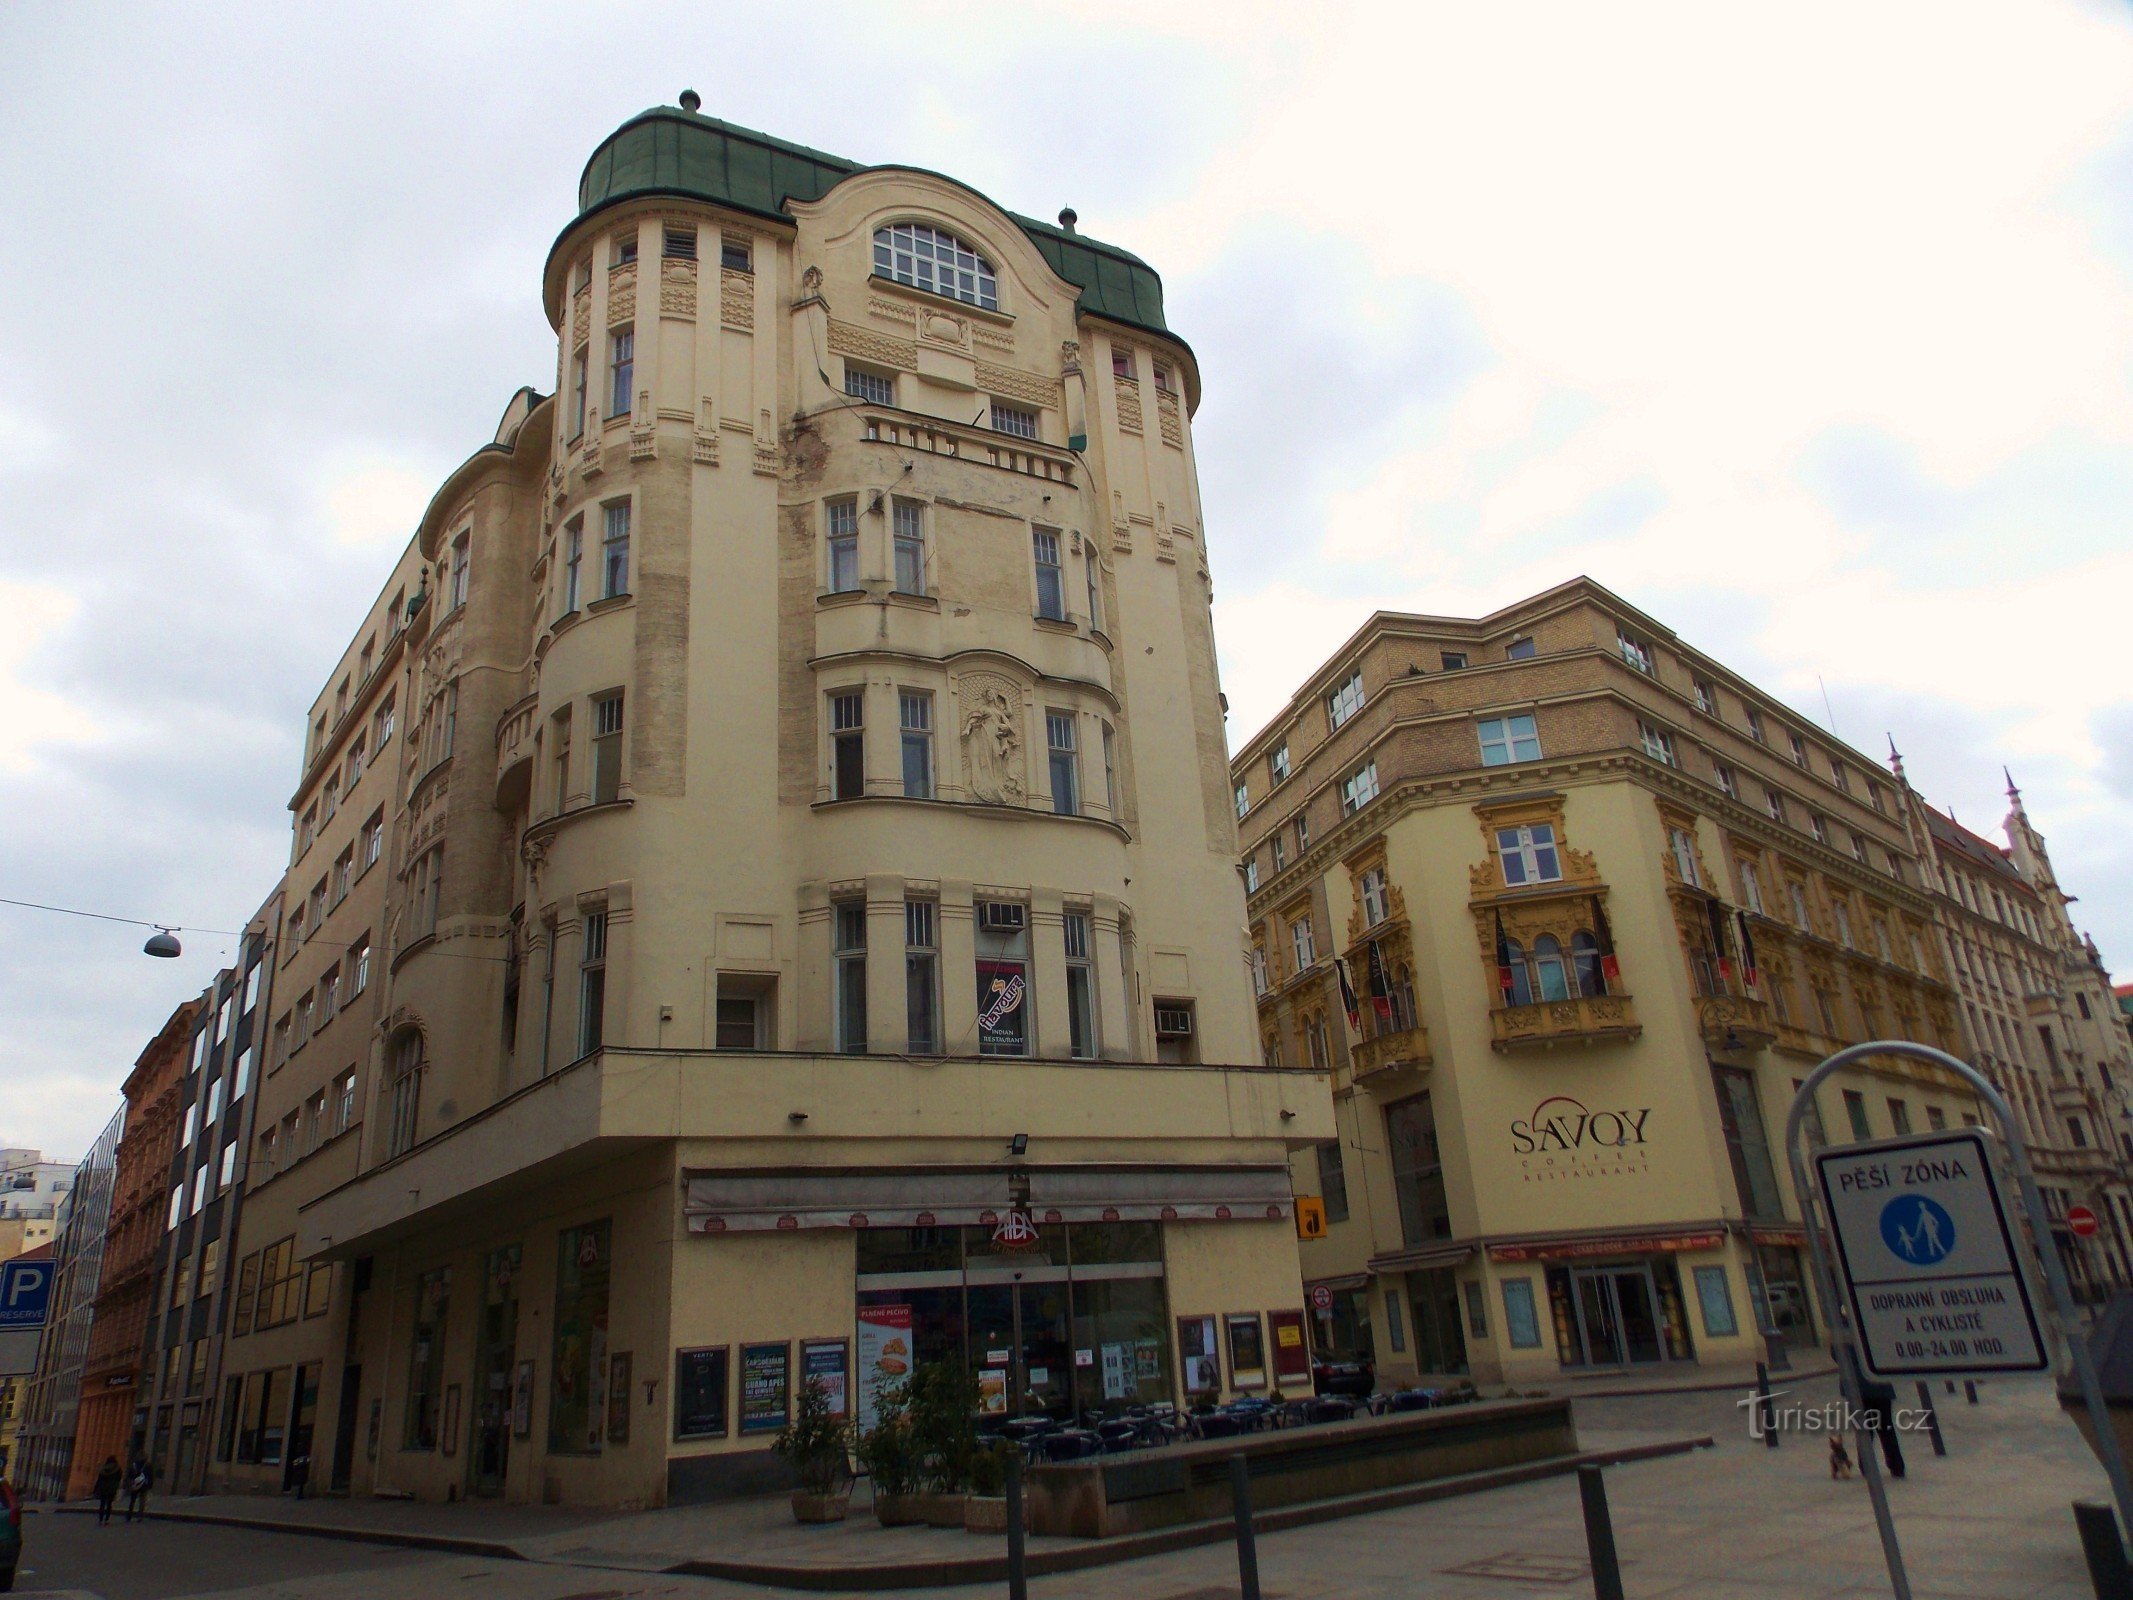 Al otro lado de Jakubské náměstí en Brno